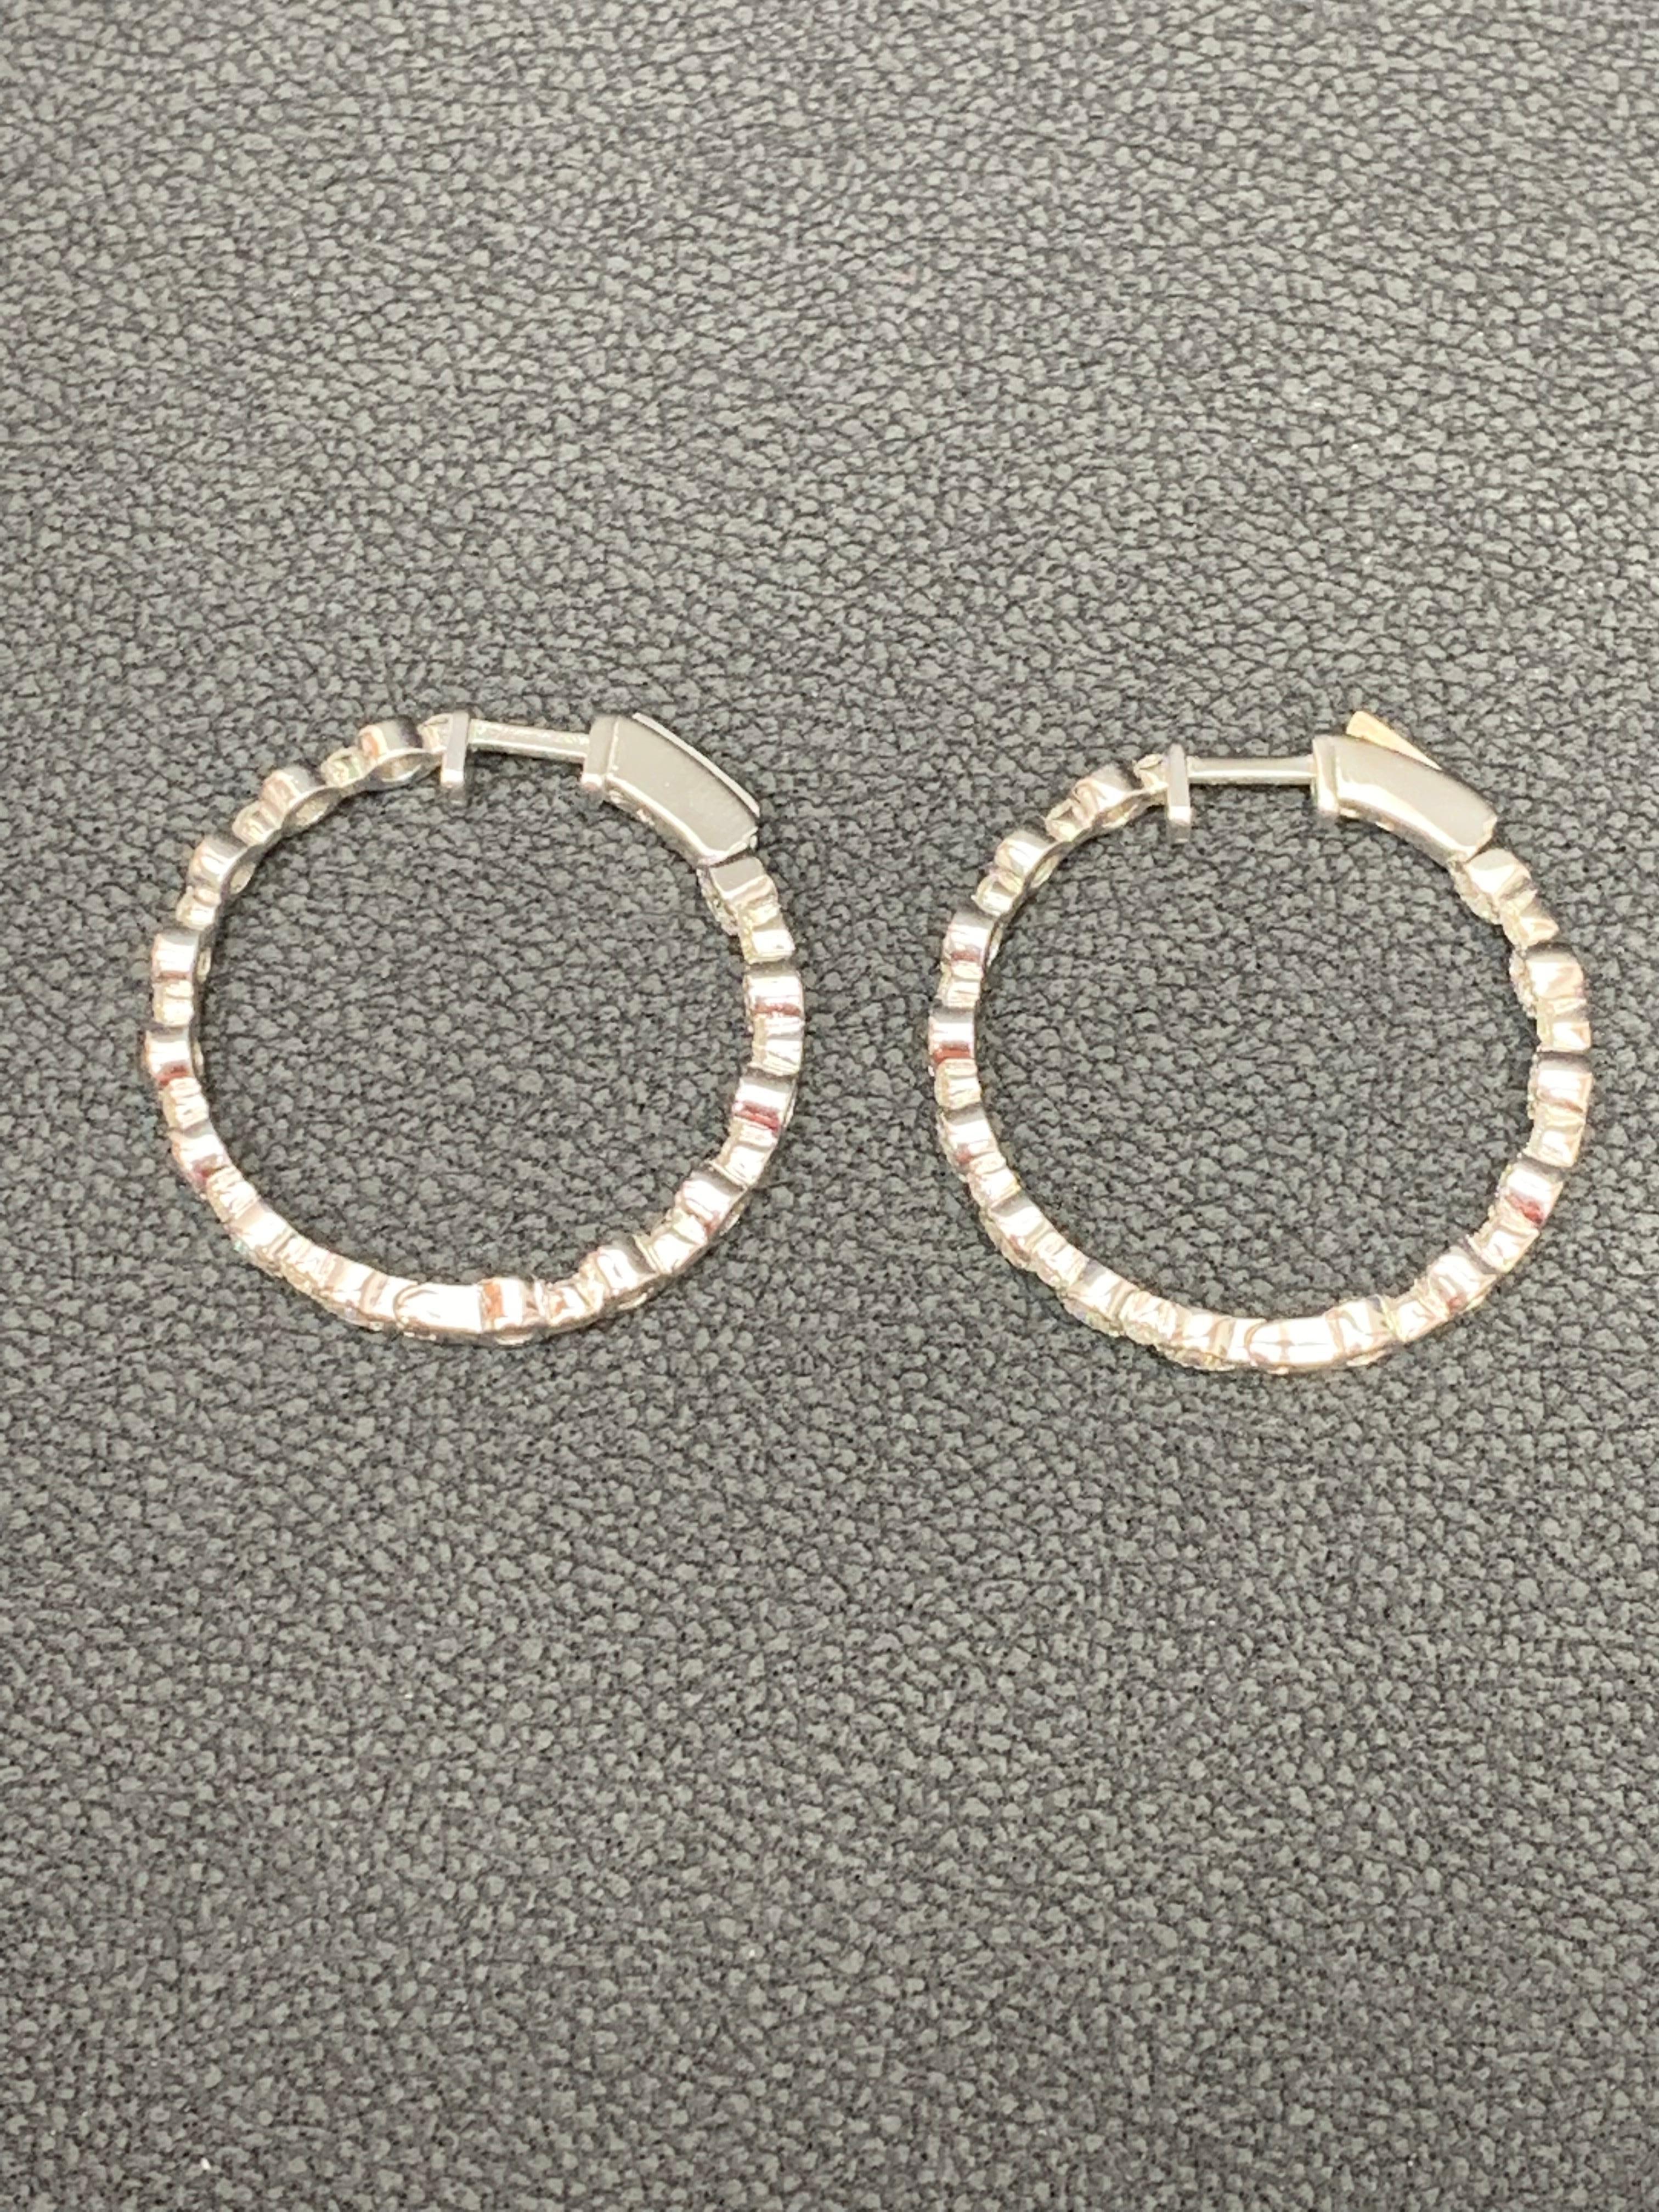 2.00 Carat Total Round Diamond Hoop Earrings in 14K White Gold For Sale 2